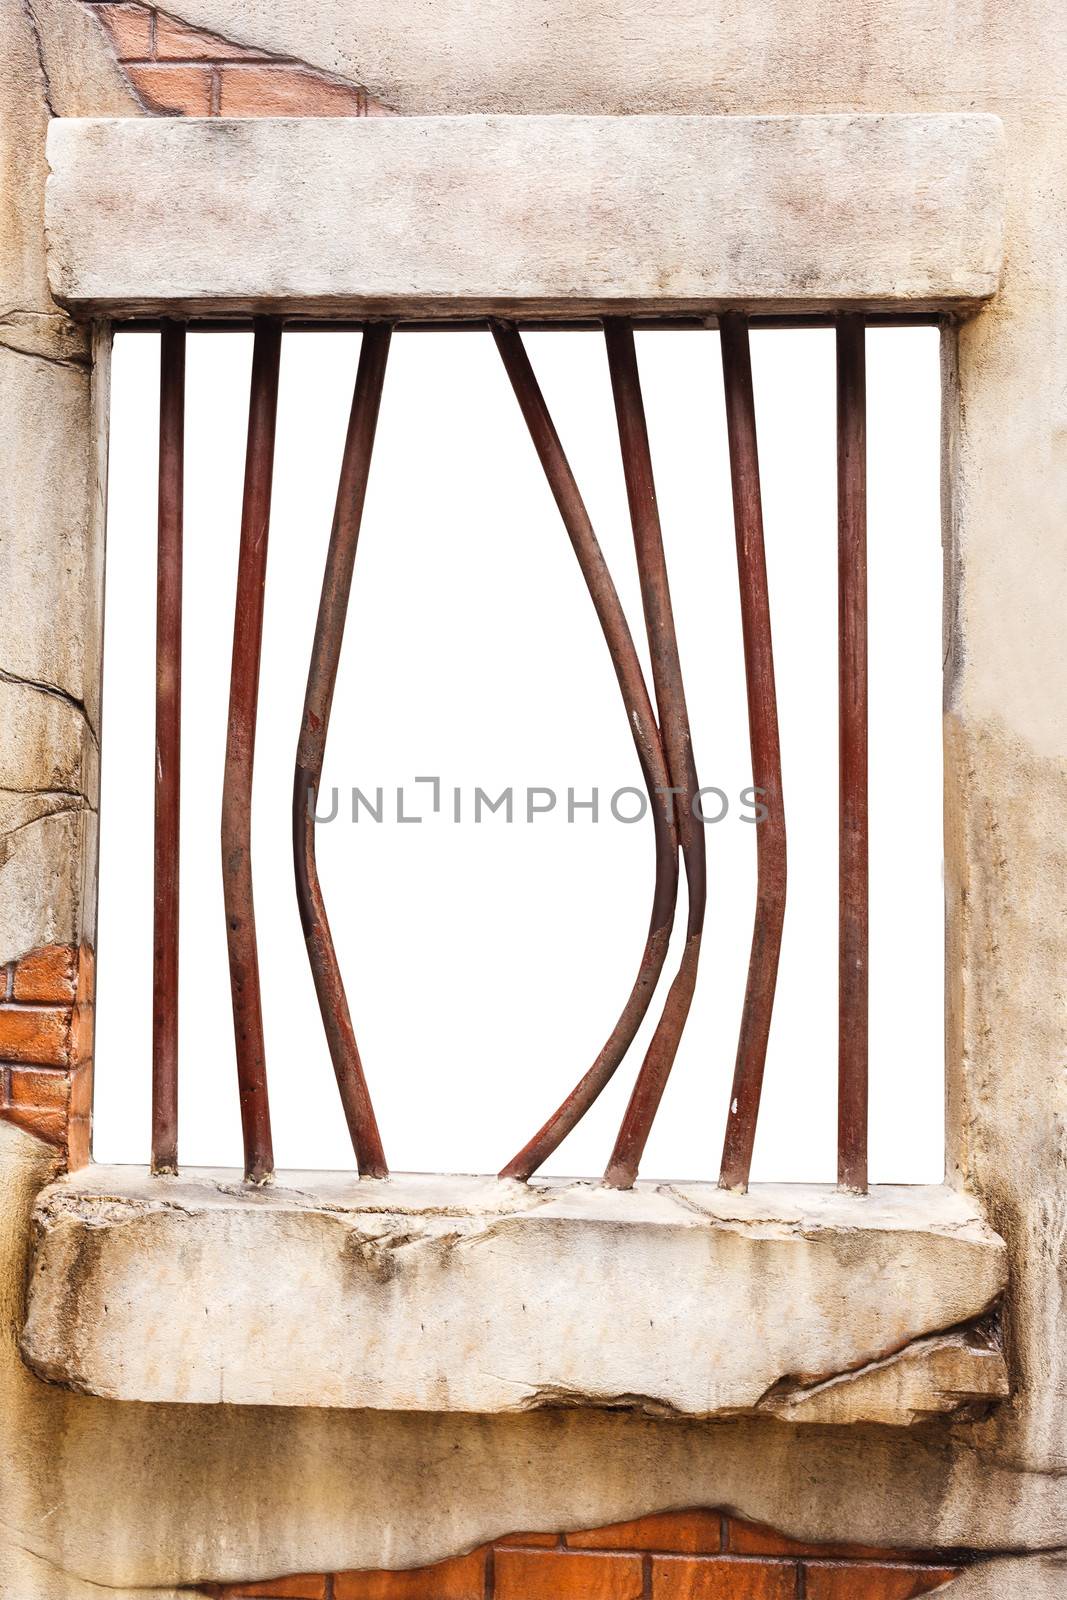 jail window on brick wall, white background by FrameAngel